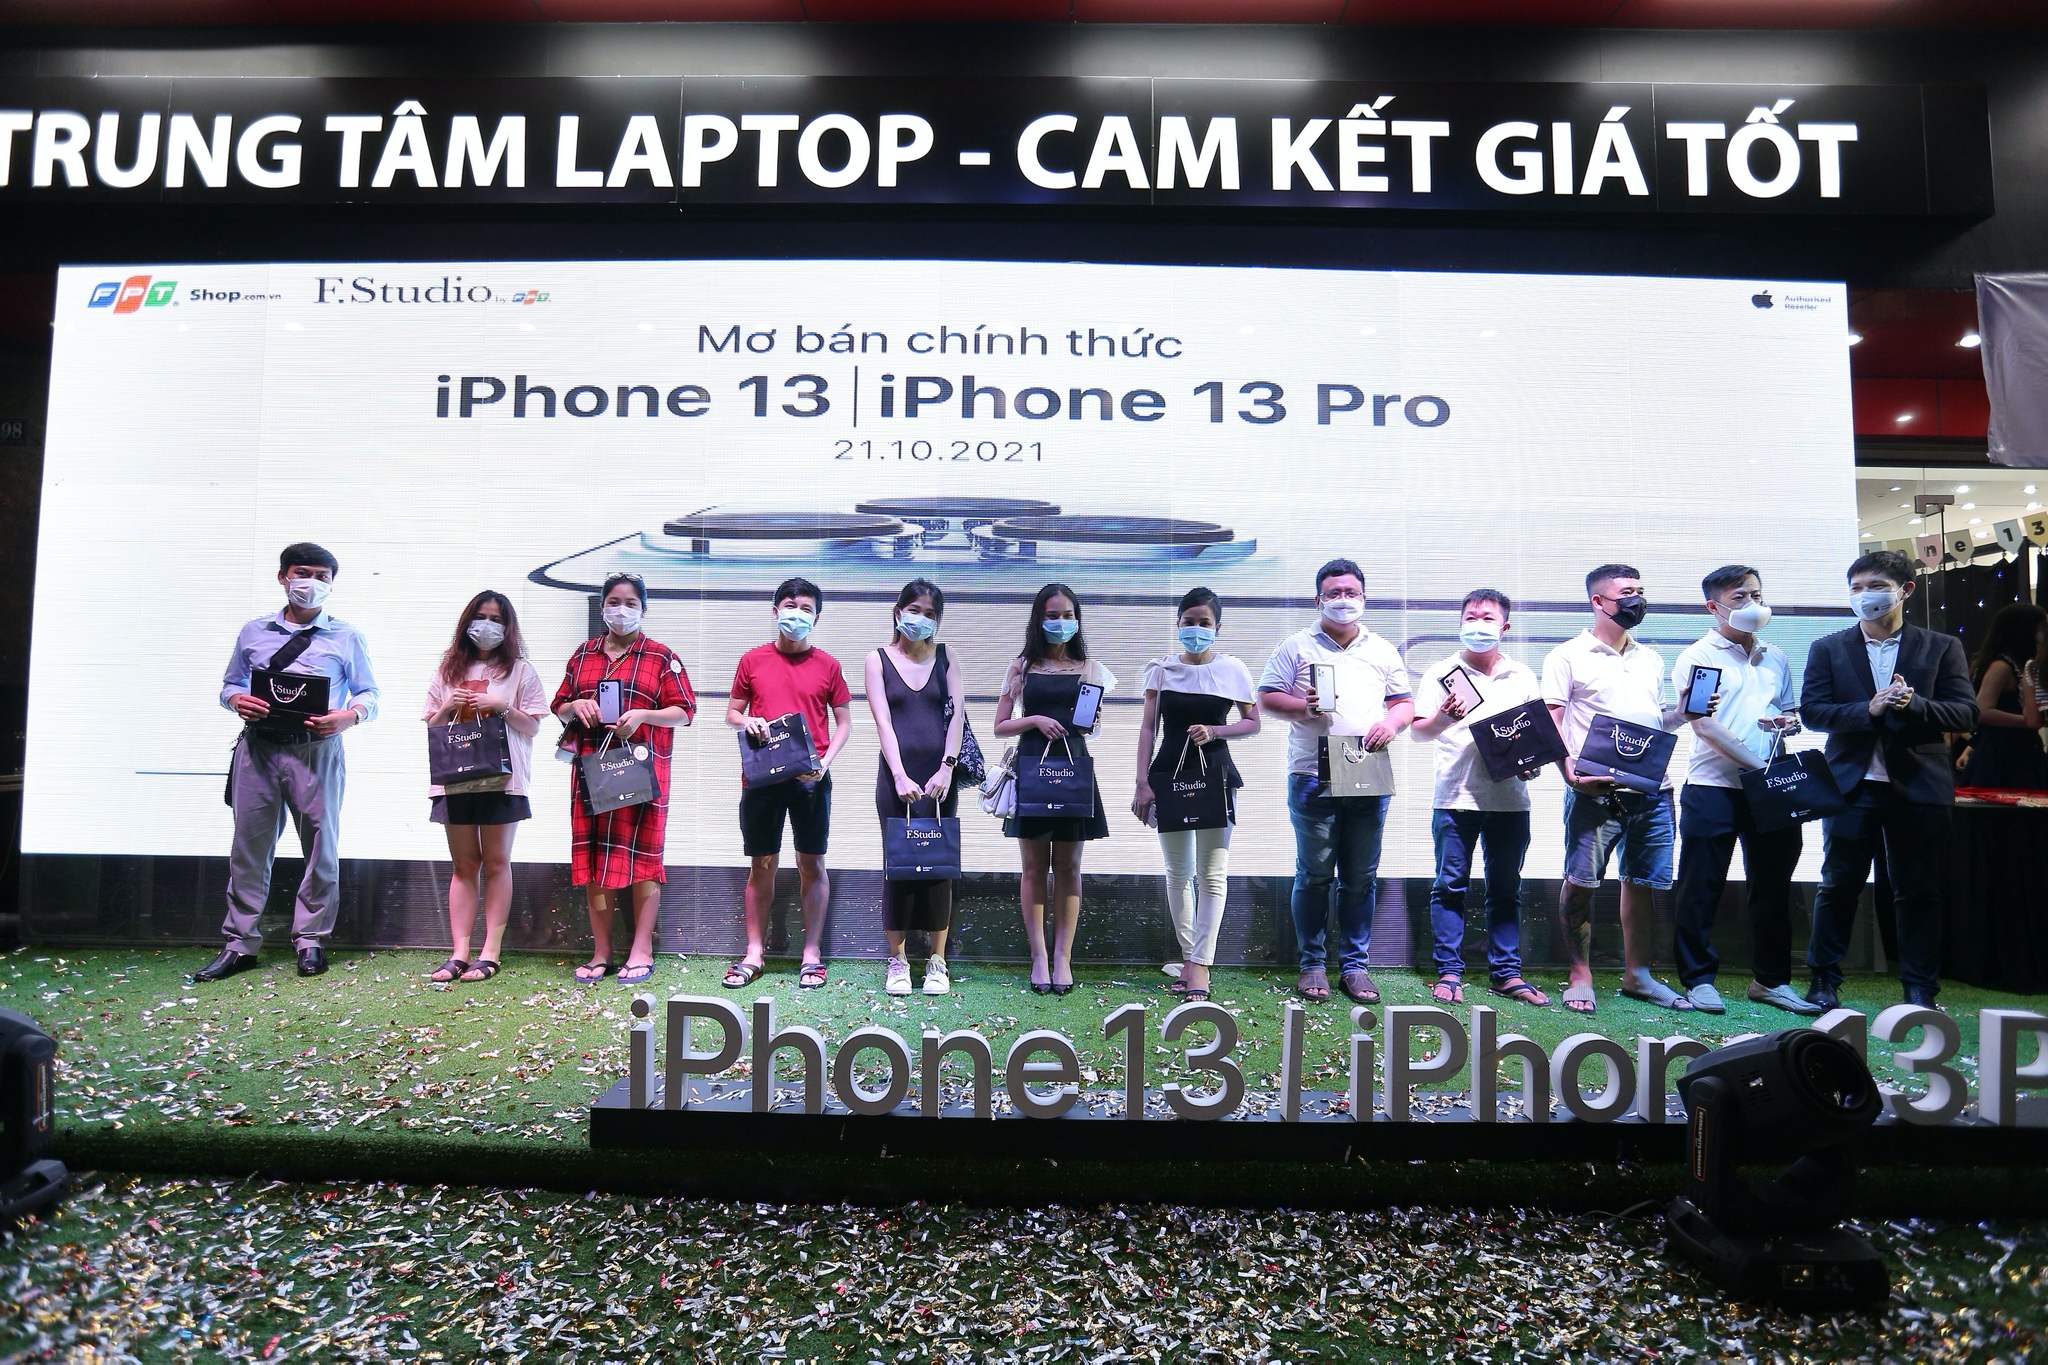 FPT-Shop-iPhone-13-MoBan- (70).JPG